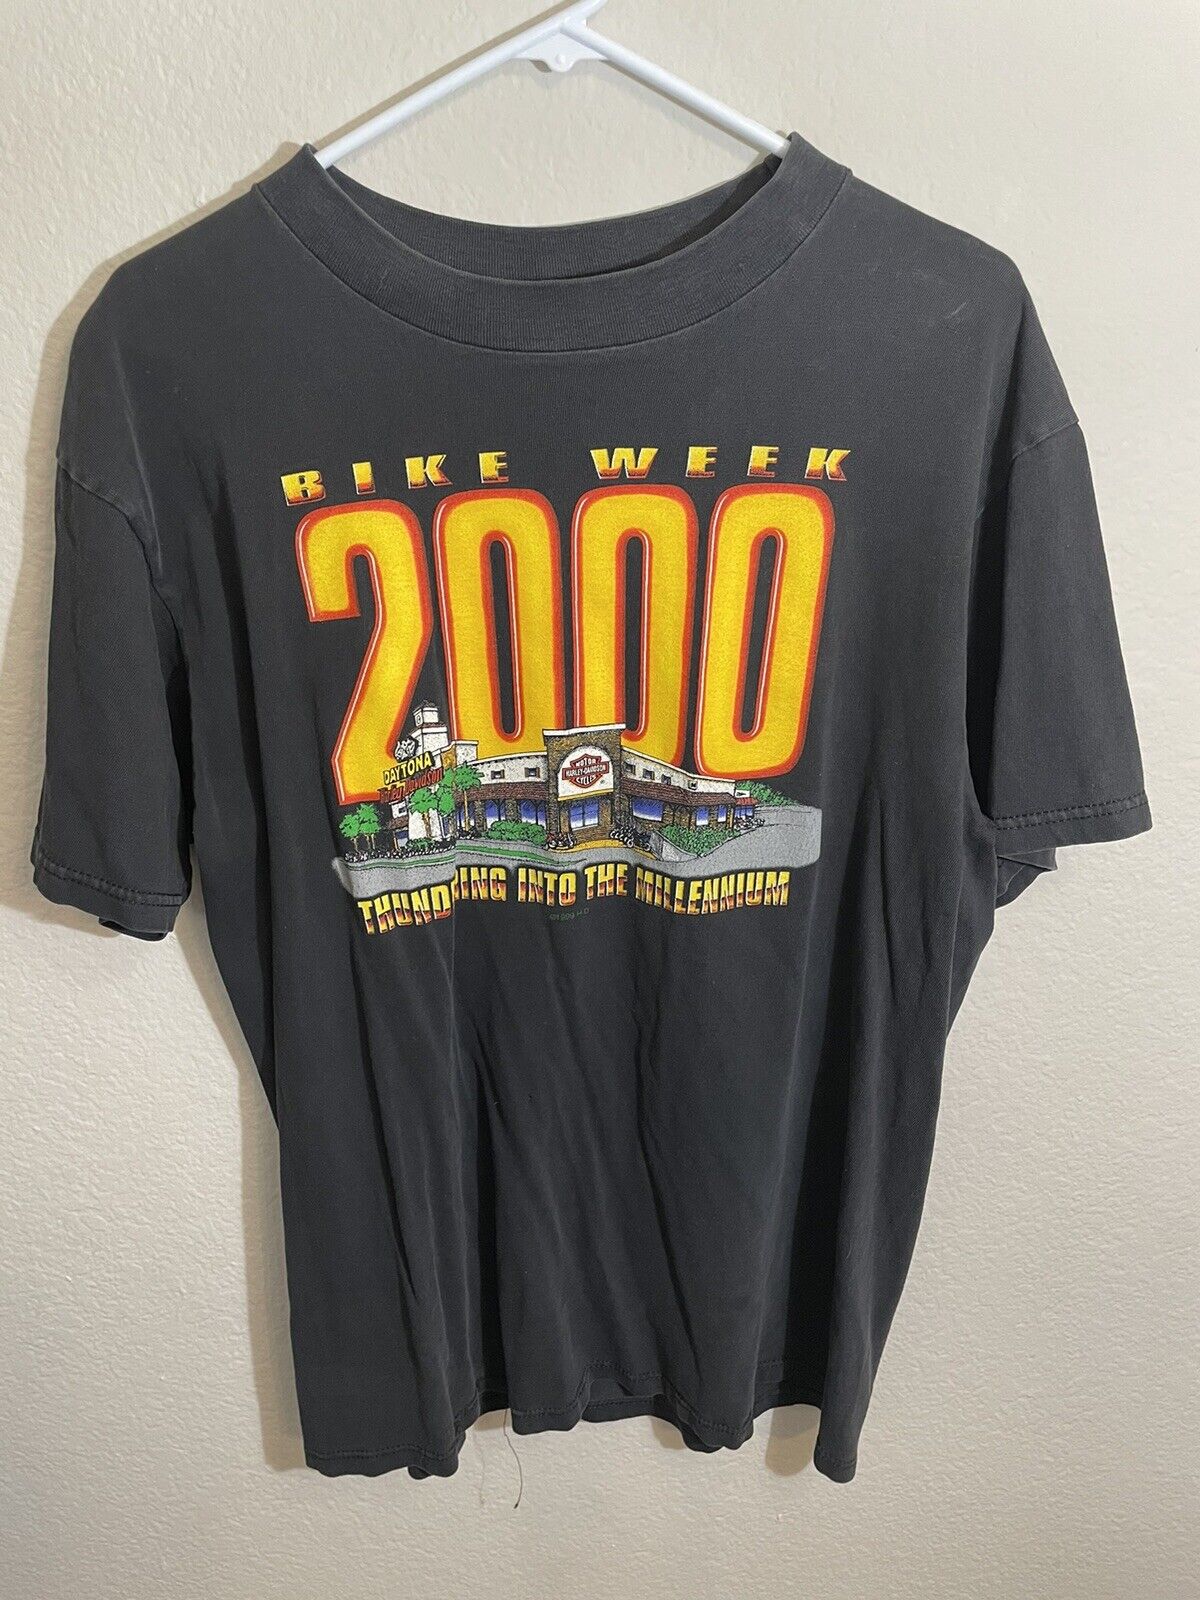 2000 Harley Davidson Bike Week Shirt Y2K Vintage